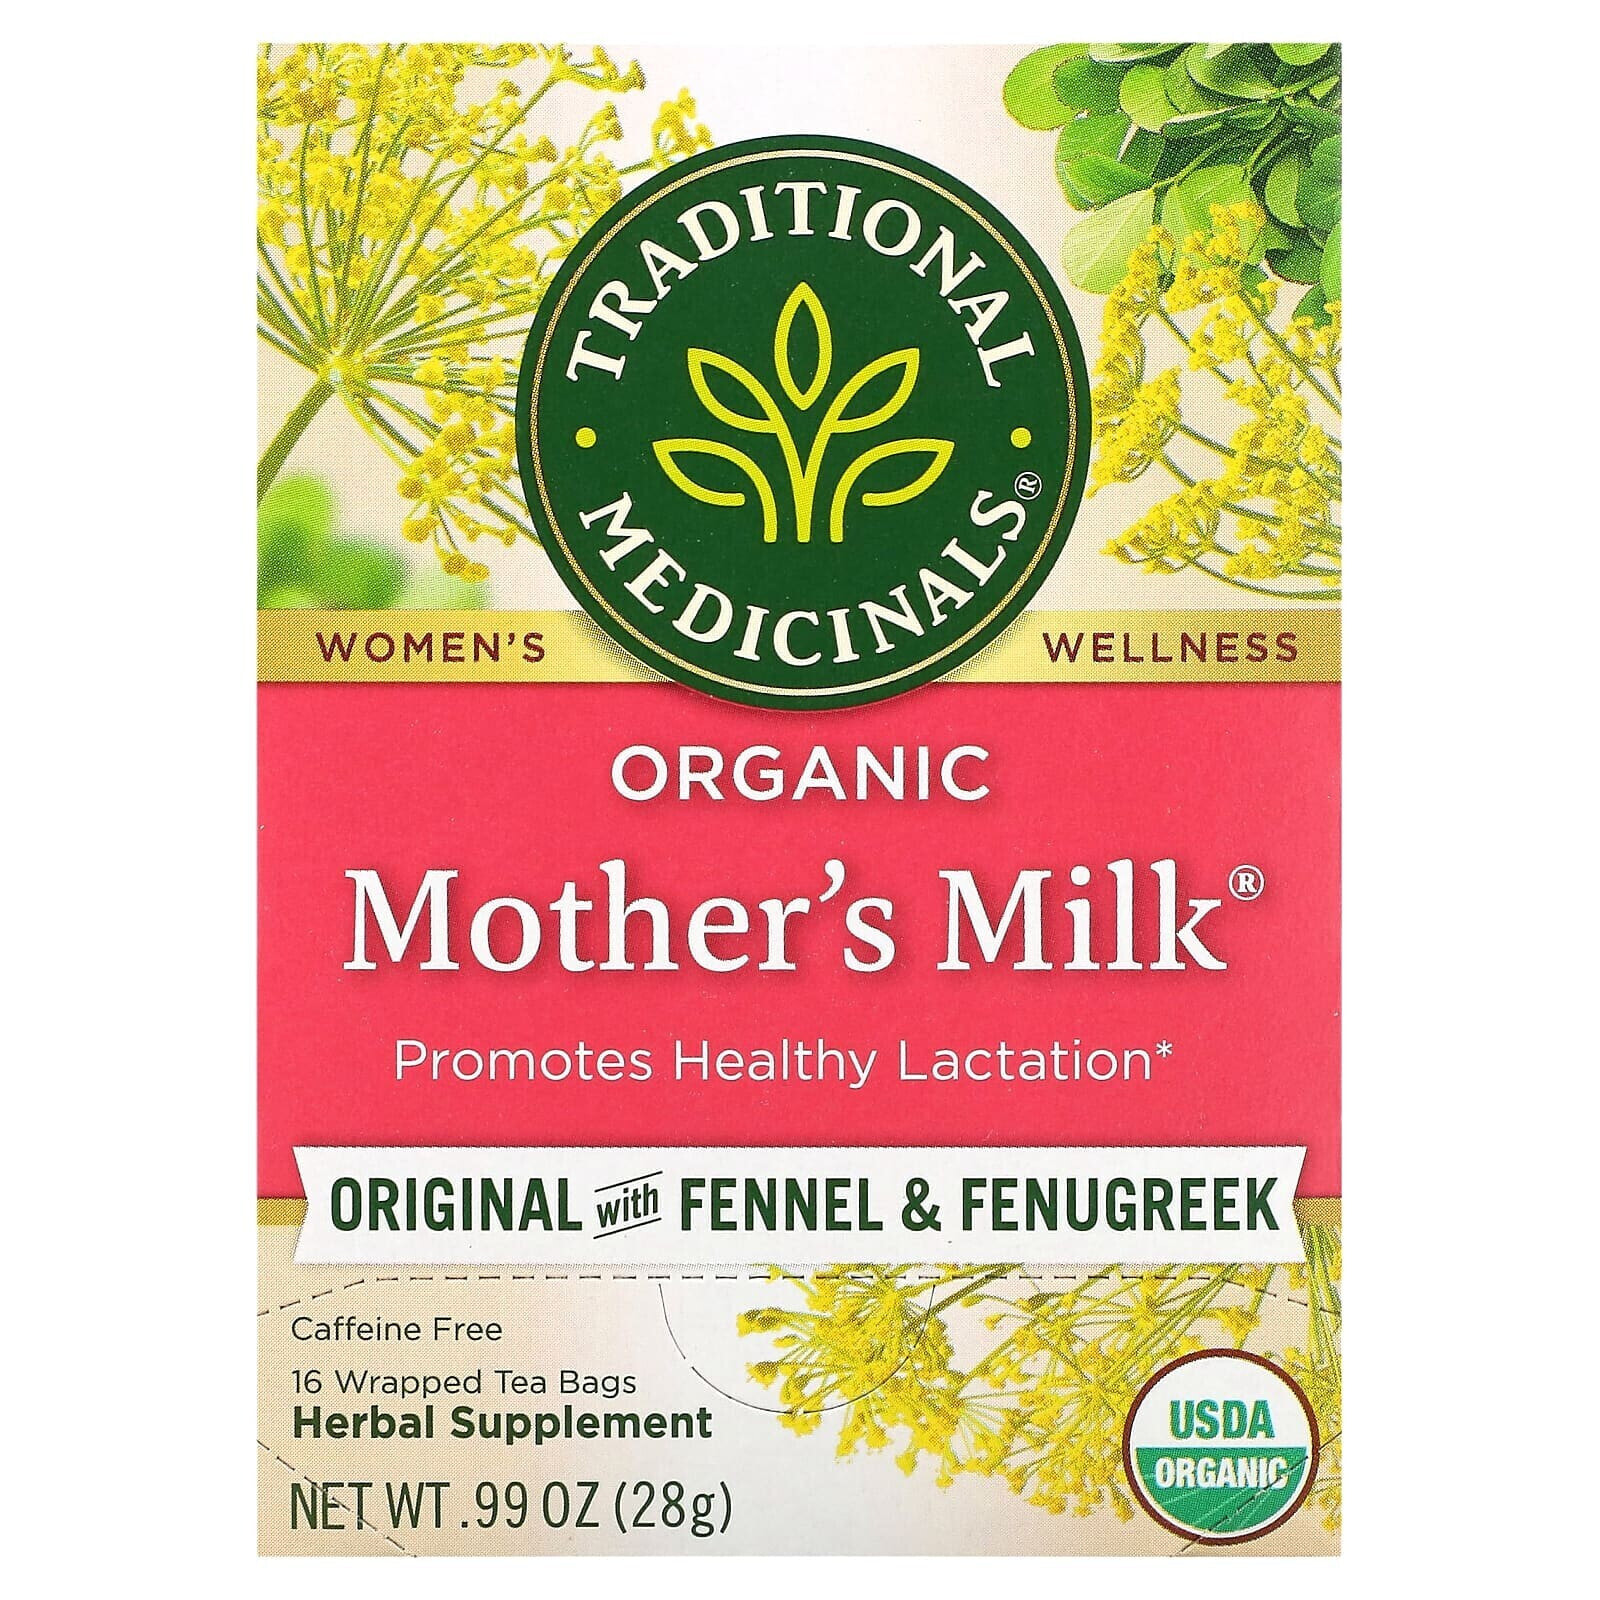 Traditional Medicinals, Organic Mother's Milk, Original with Fennel & Fenugreek, Caffeine Free, 32 Wrapped Tea Bags, 0.06 oz (1.75 g) Each